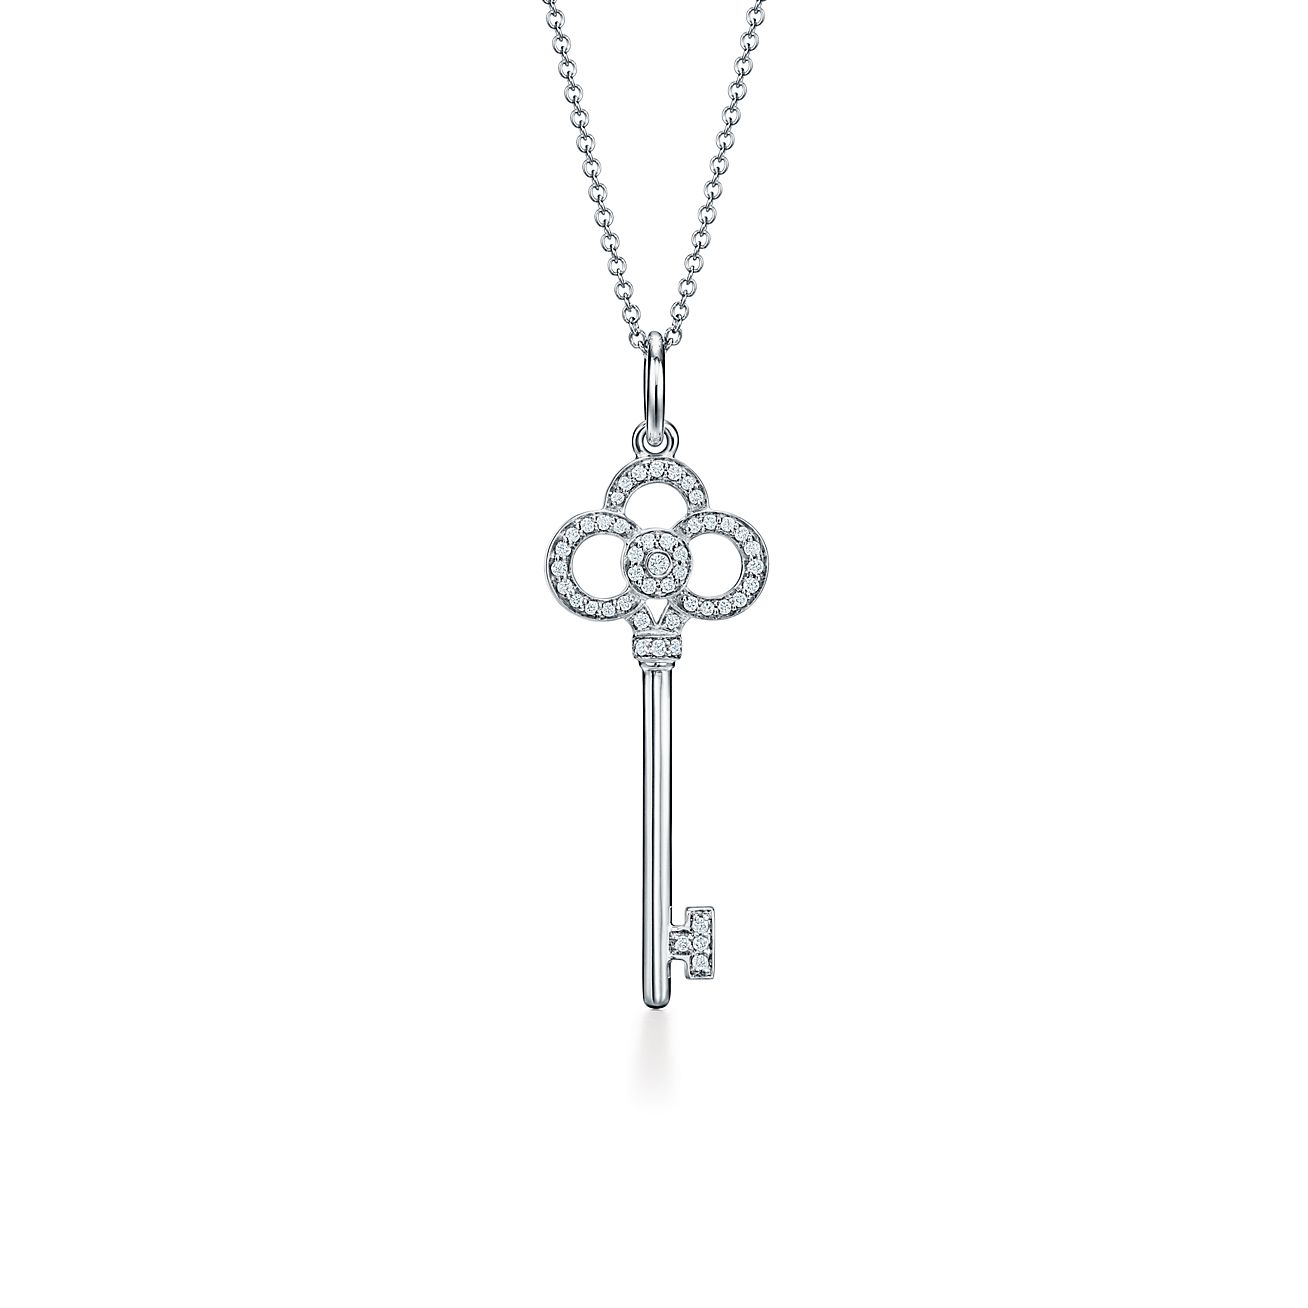 Tiffany Keys crown key pendant with 